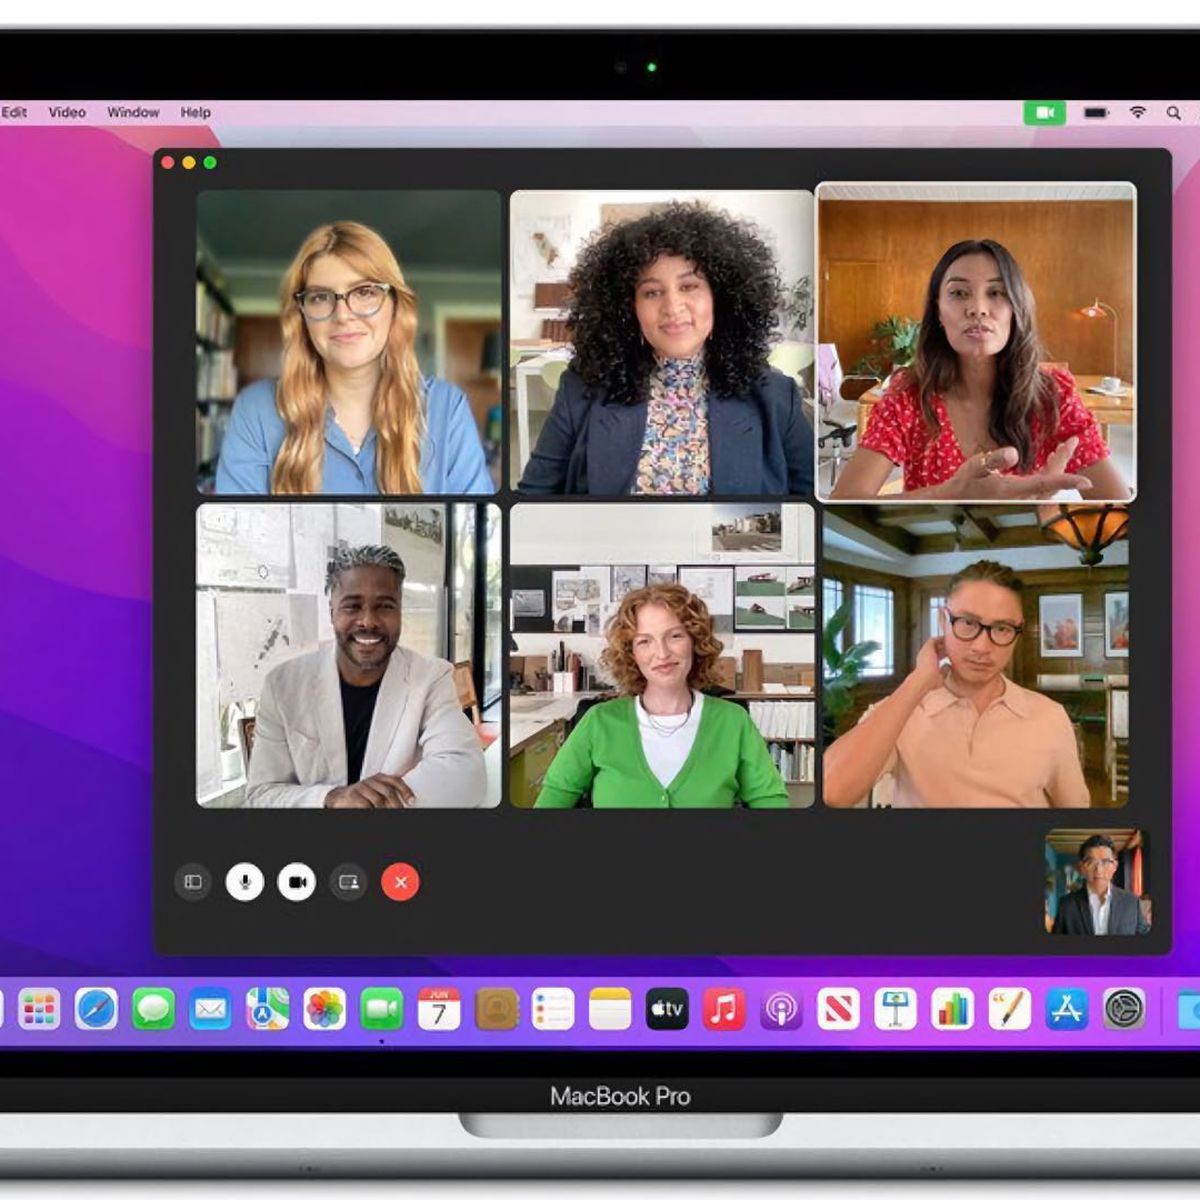 MacBook Pro to Finally Get a Major Webcam Upgrade - MacRumors